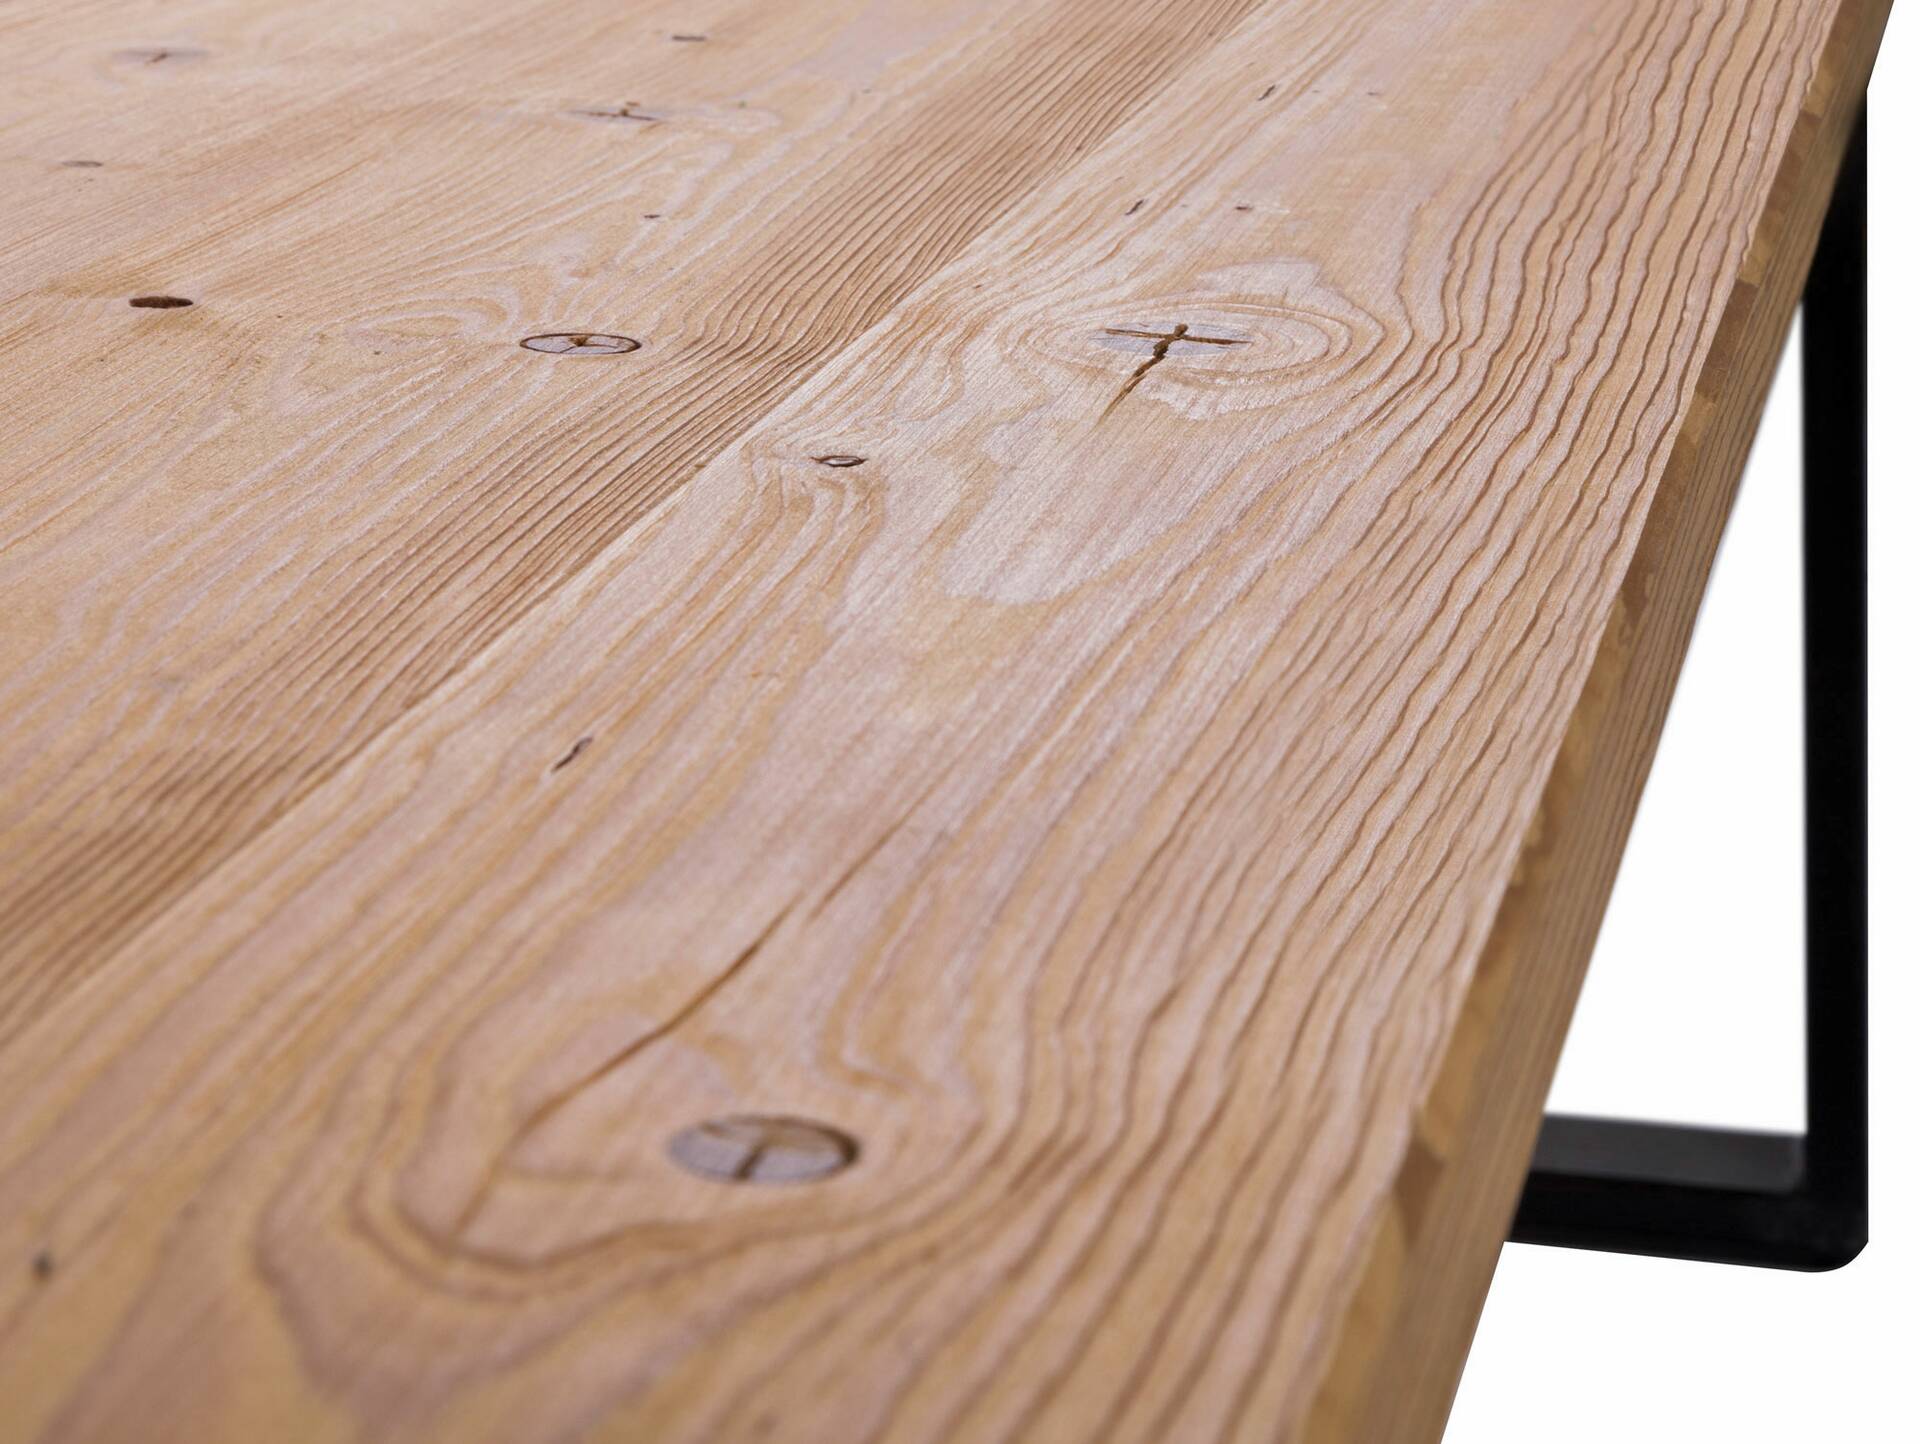 CURBY Eckbank, rustikale Altholzoptik, Material Massivholz, Fichte gebürstet 167 x 224 cm | natur | ohne Sitzkissen